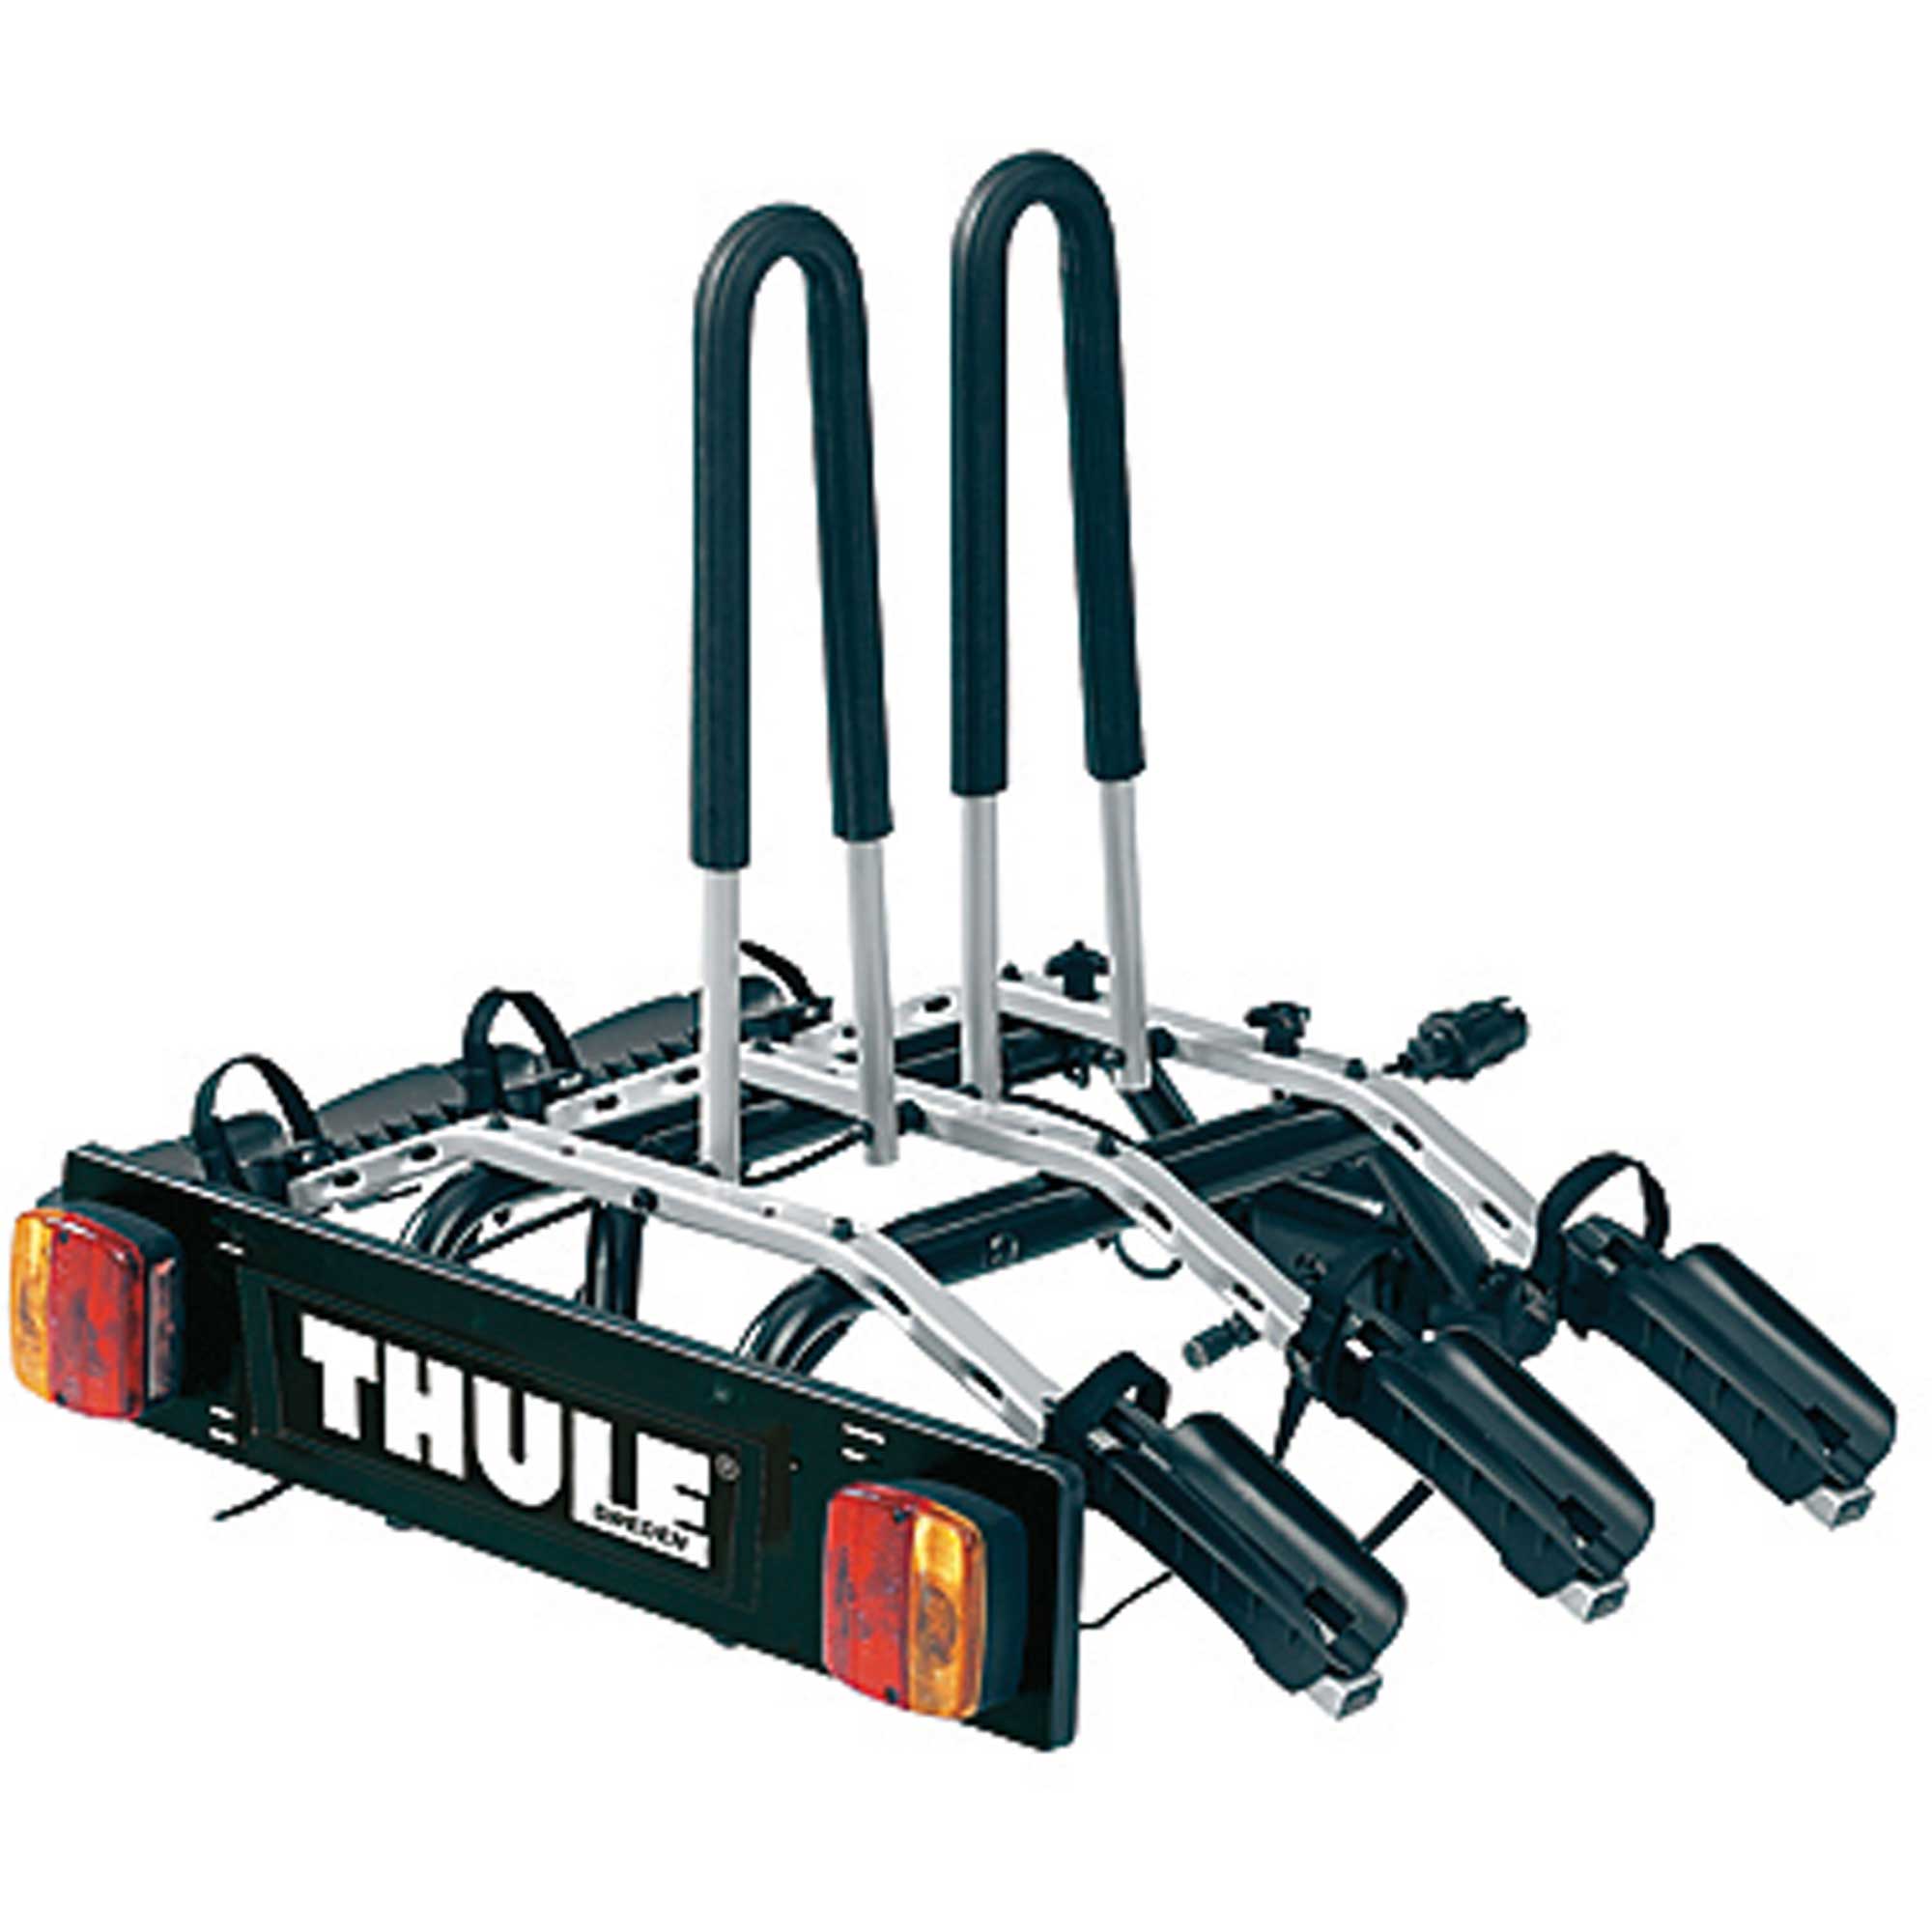 thule tow ball bike rack